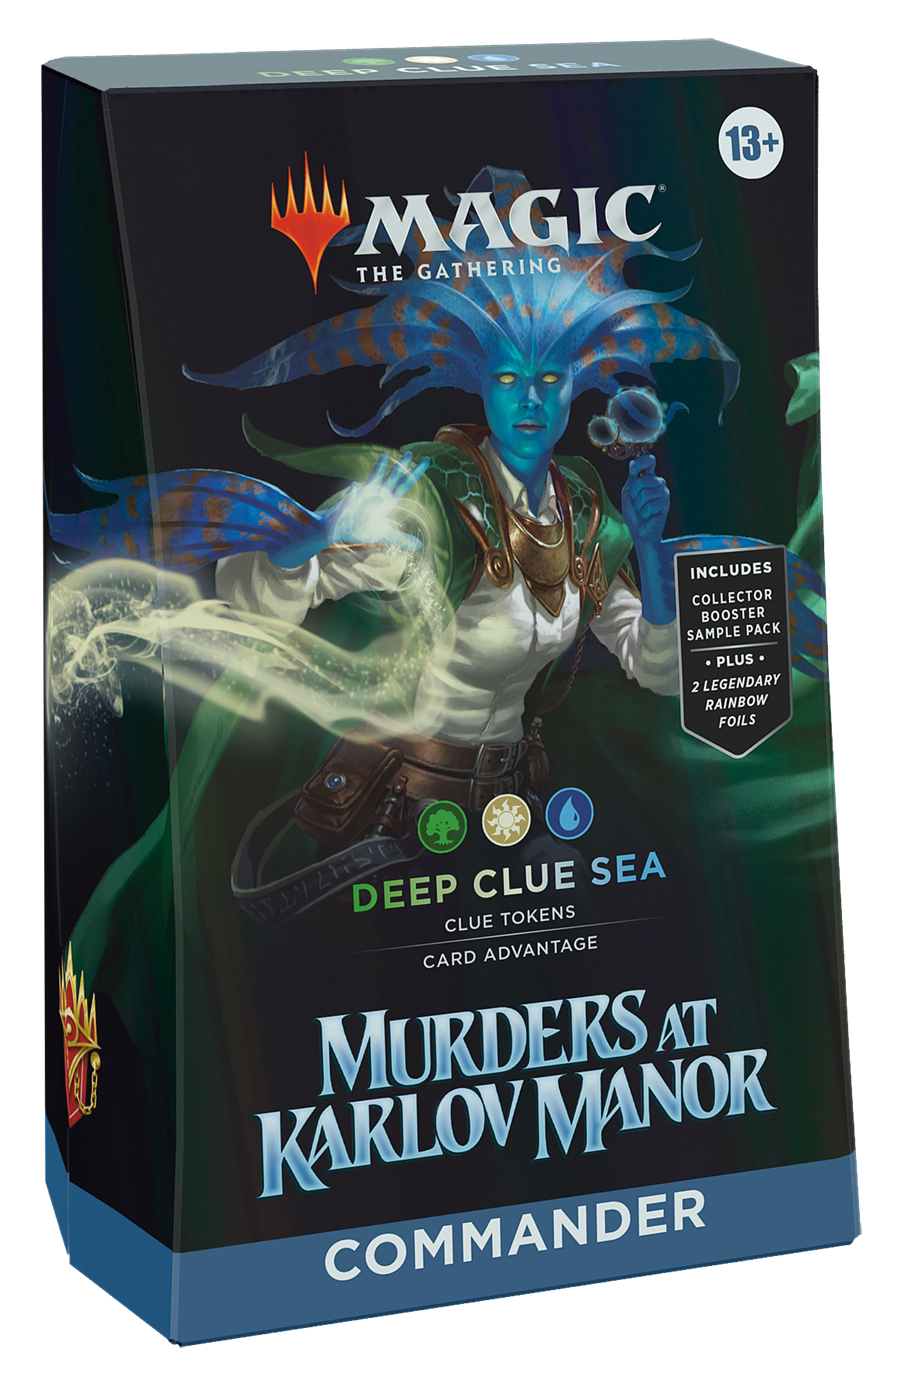 Magic: The Gathering Murders at Karlov Manor Commander Deck